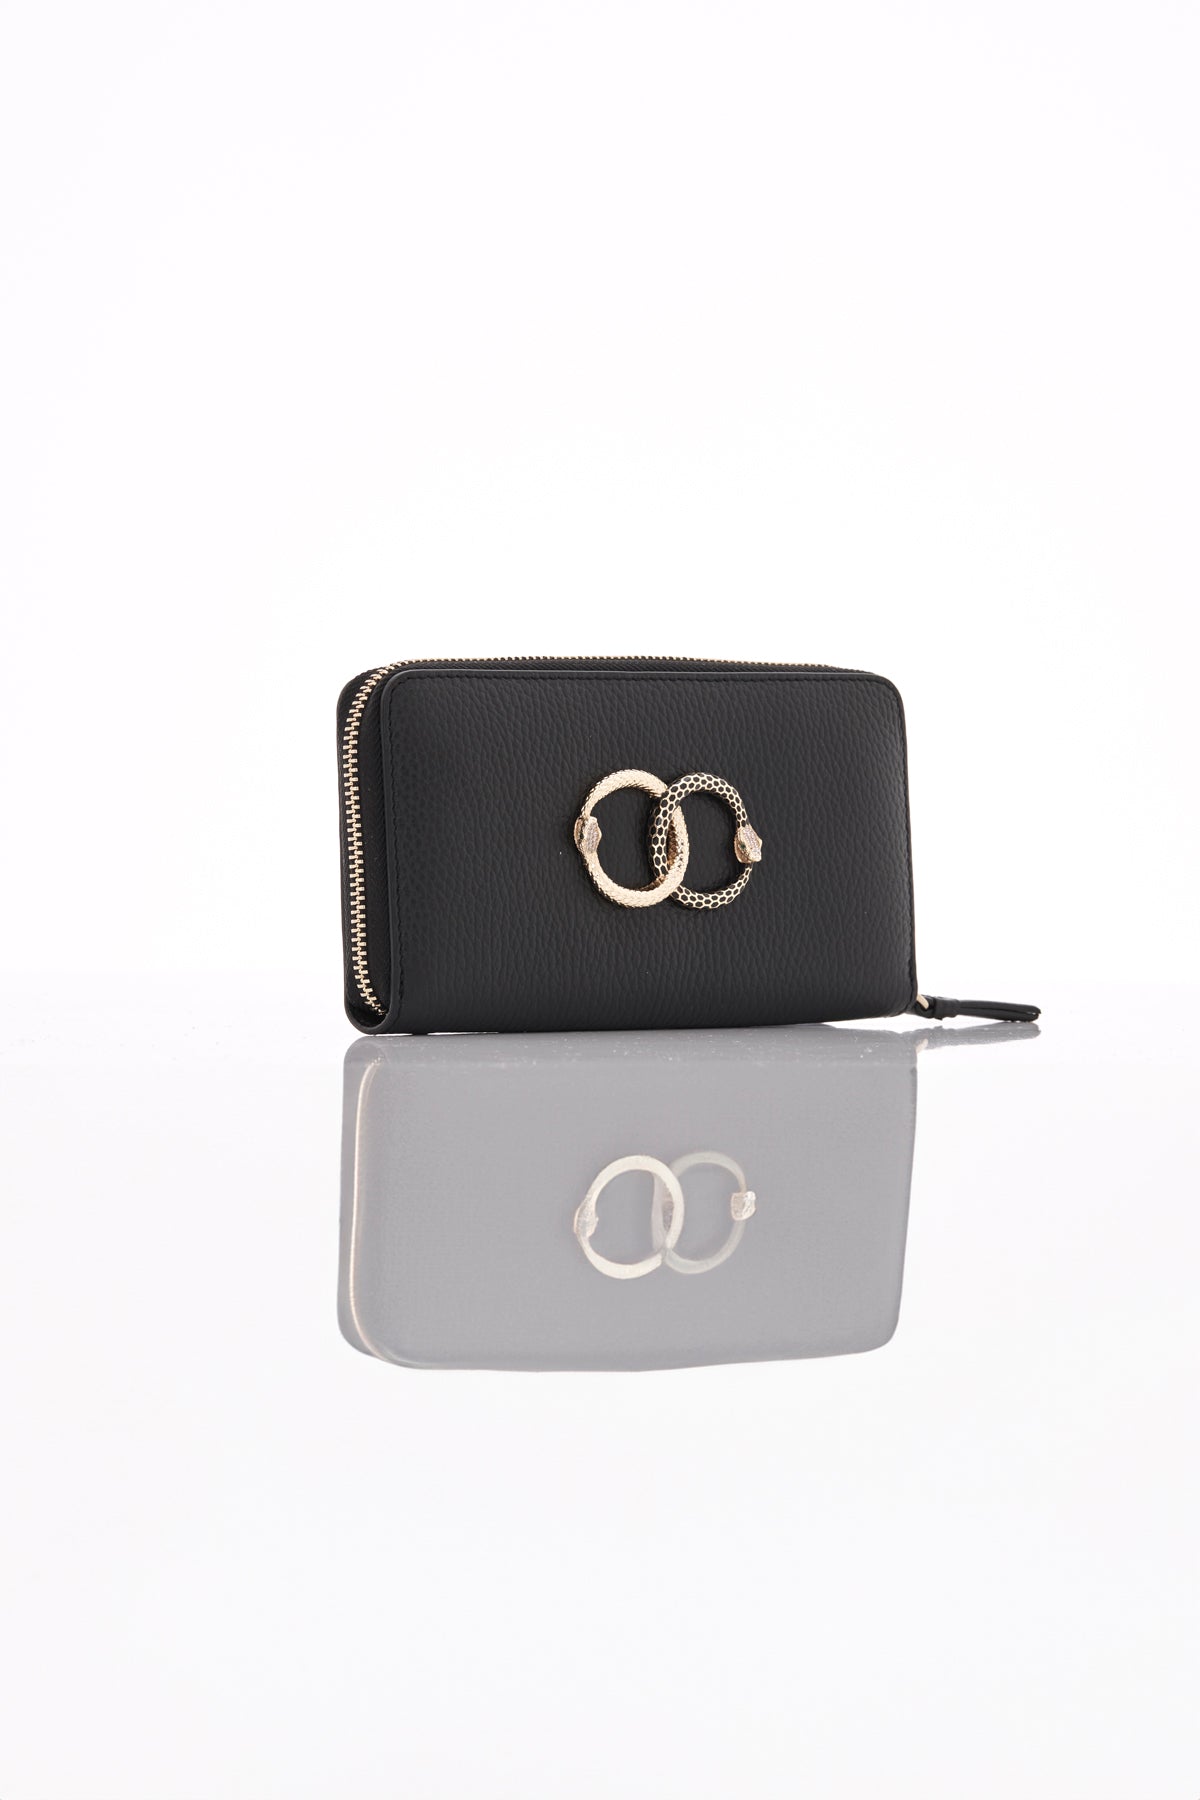 black ouroboros genuine leather women's wallet front